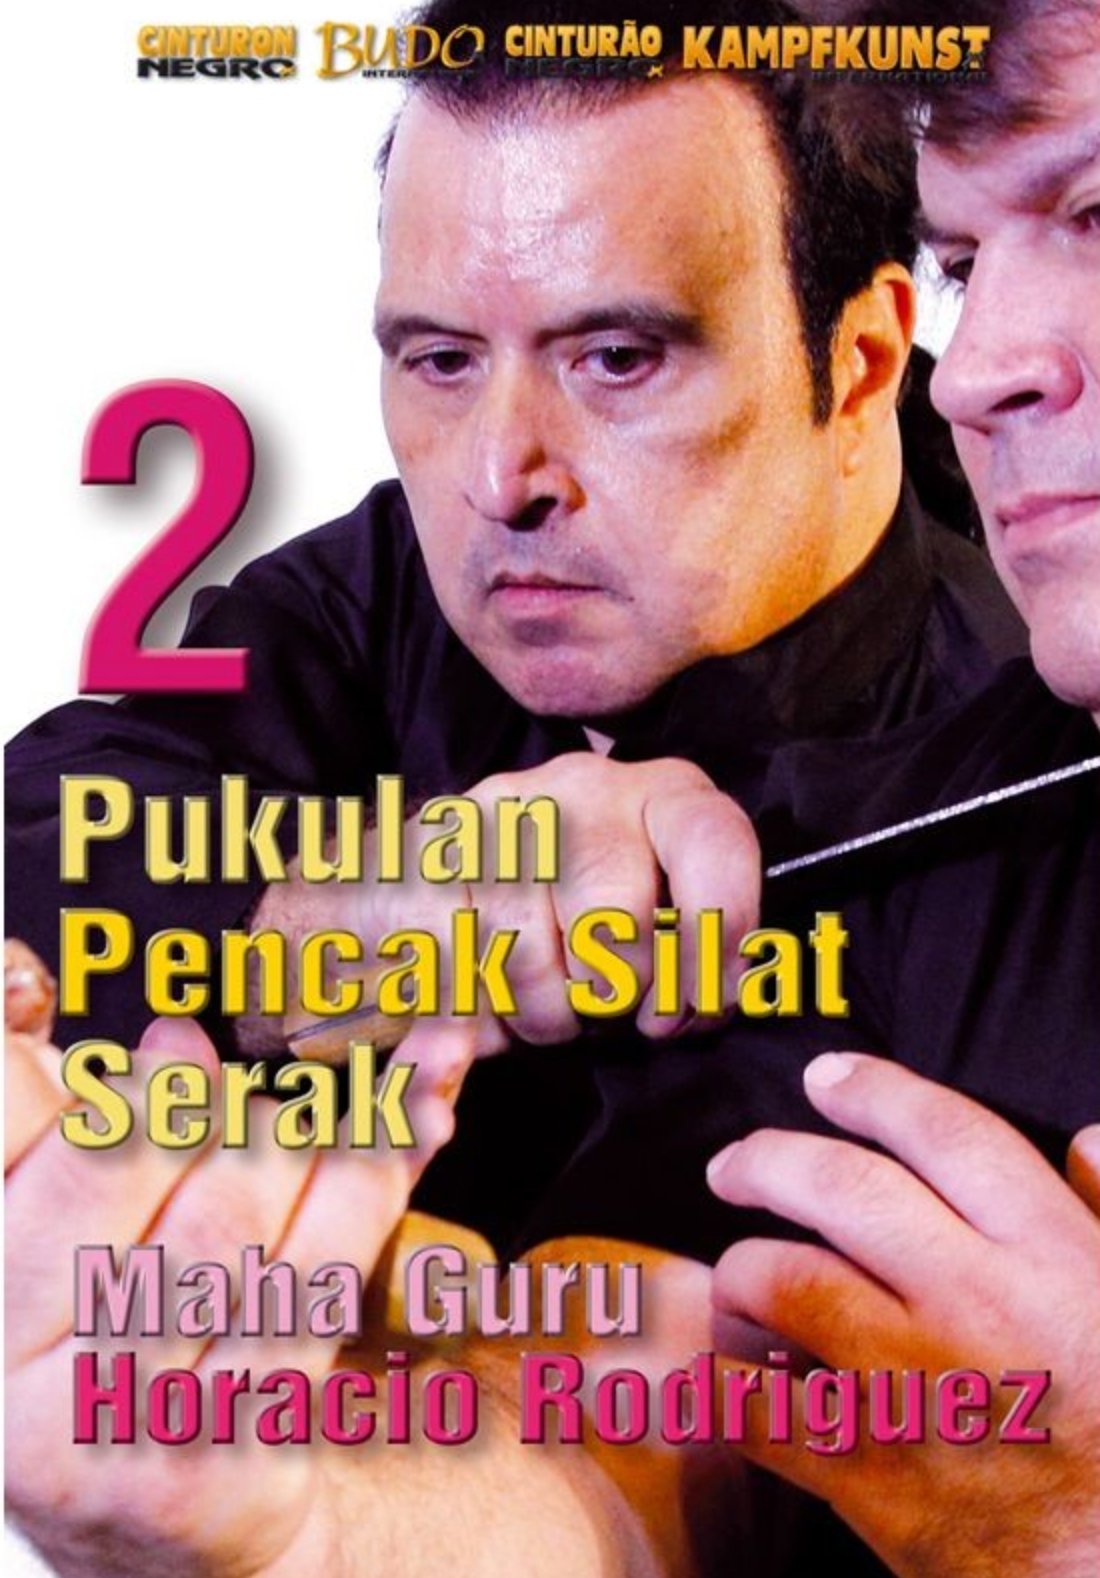 Pukulan Pencak Silat Serak Vol 2 DVD with Horacio Rodriguez - Budovideos Inc